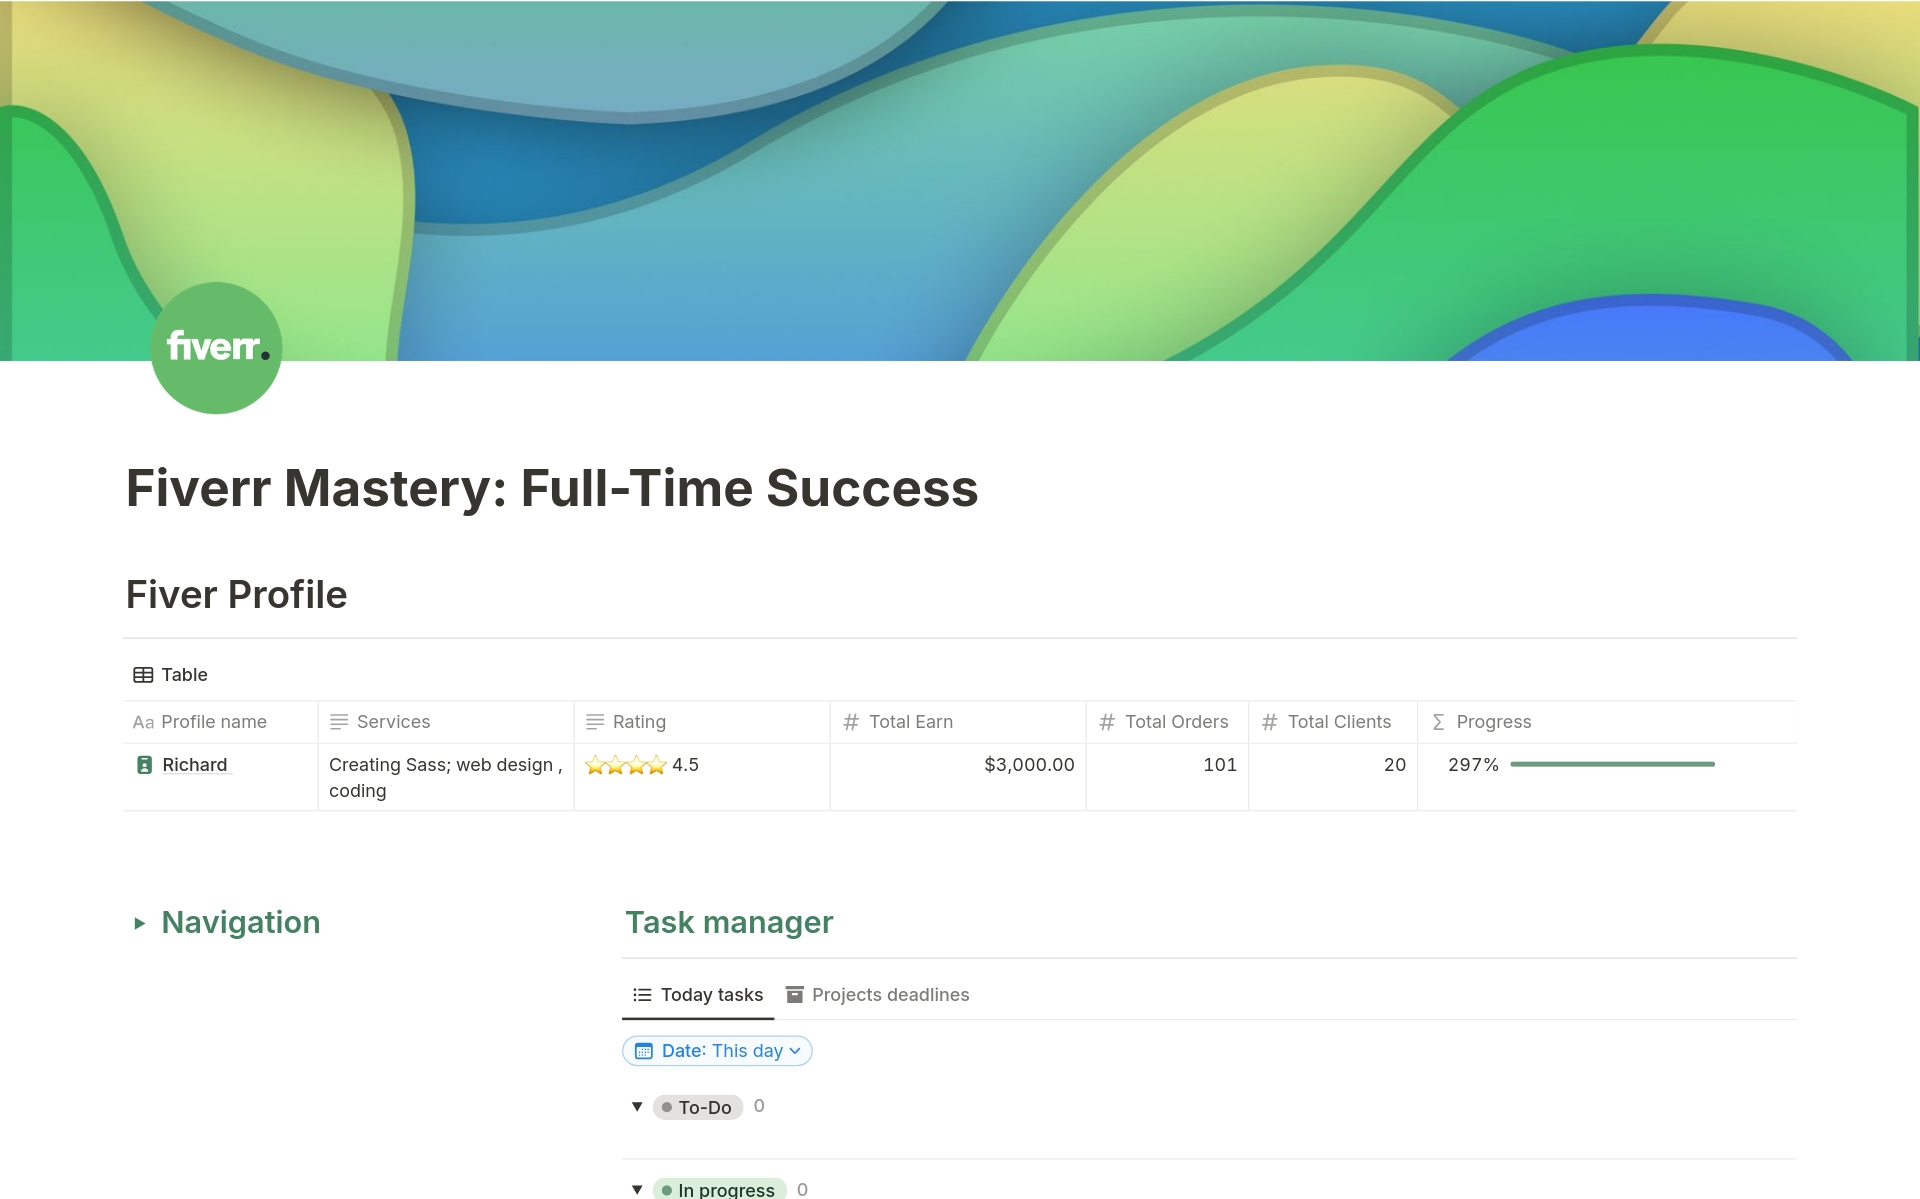 Fiverr Mastery: Full-Time Success님의 템플릿 미리보기